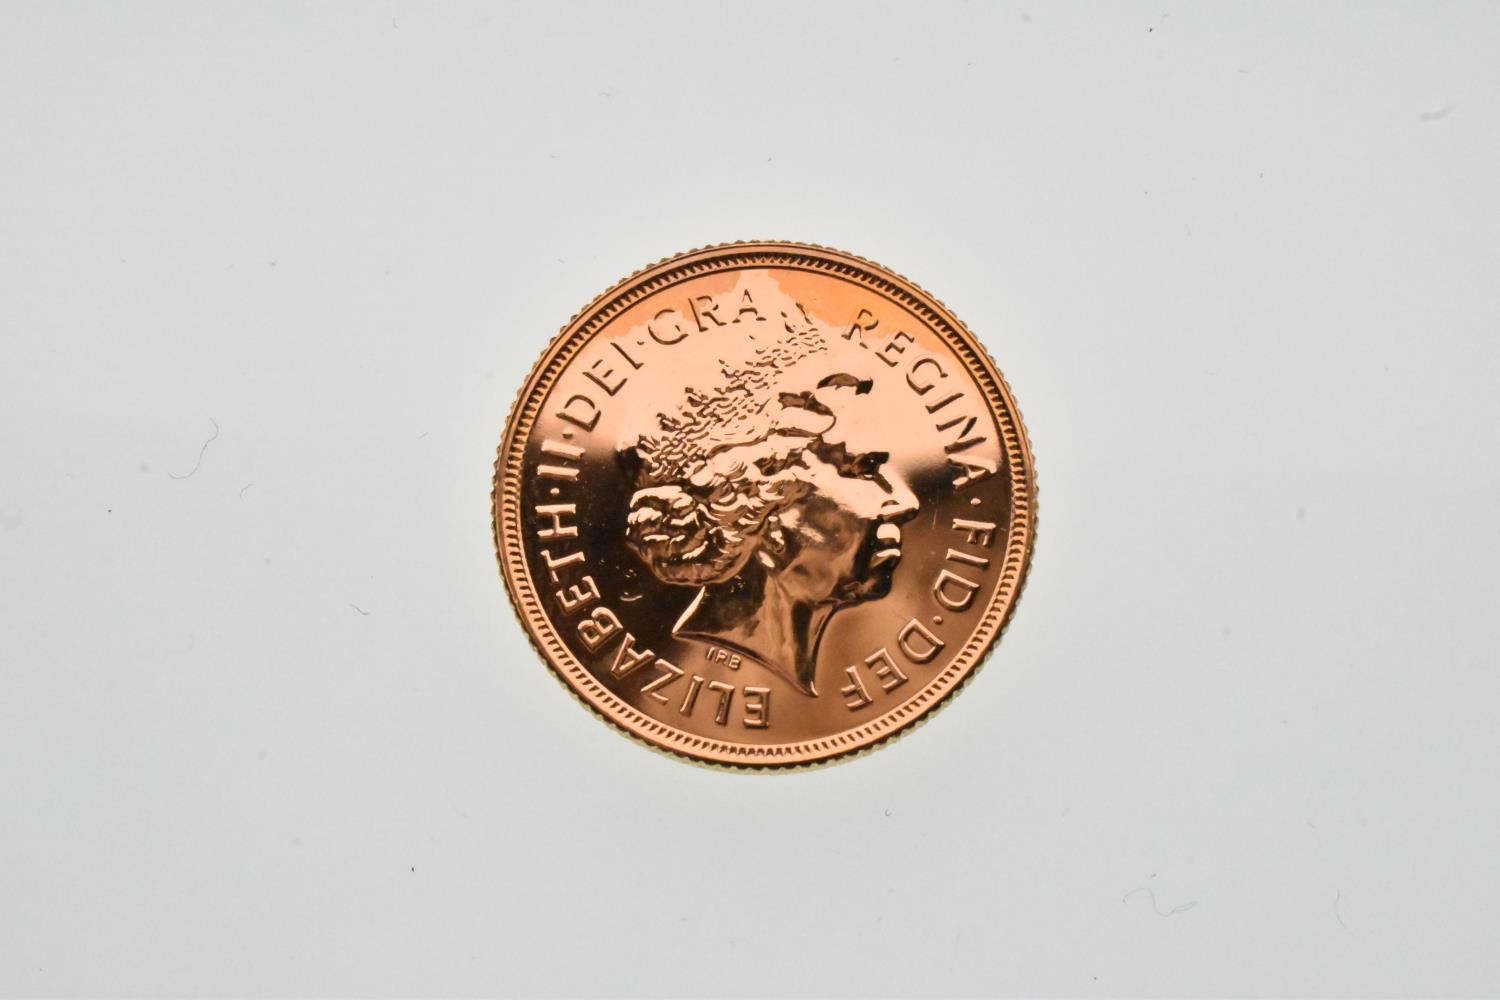 United Kingdom - Elizabeth II (1952-2022), Gold Sovereign, dated 2008, - Image 2 of 2